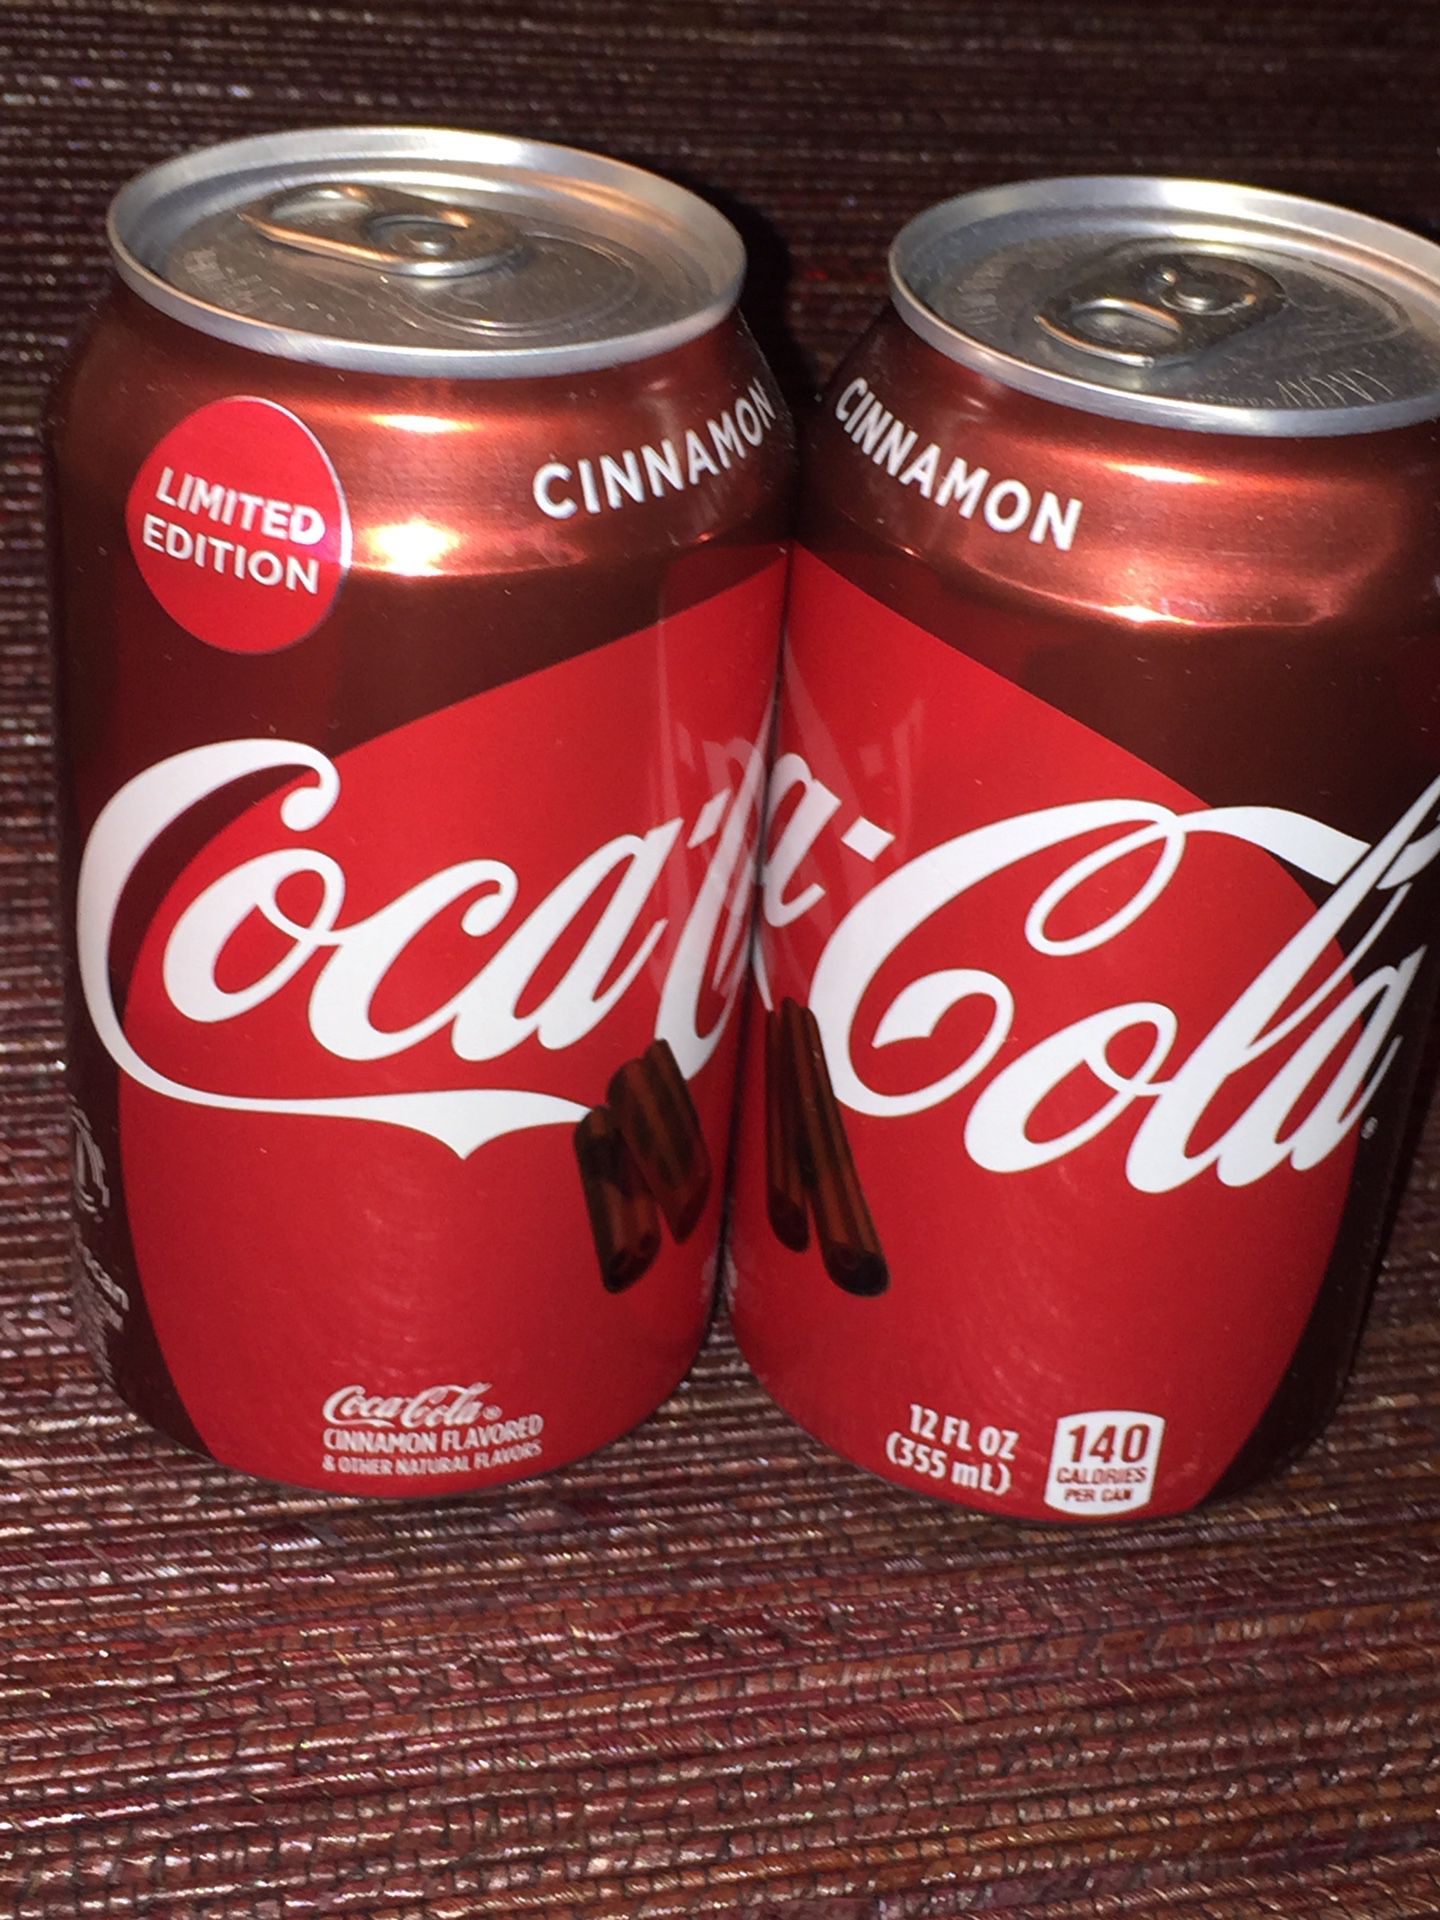 New Limited Edition Coca-Cola Cinnamon Flavor 12oz Coke Cans Drinks Soda Pop Unopened Holiday 2019 Cokes 2